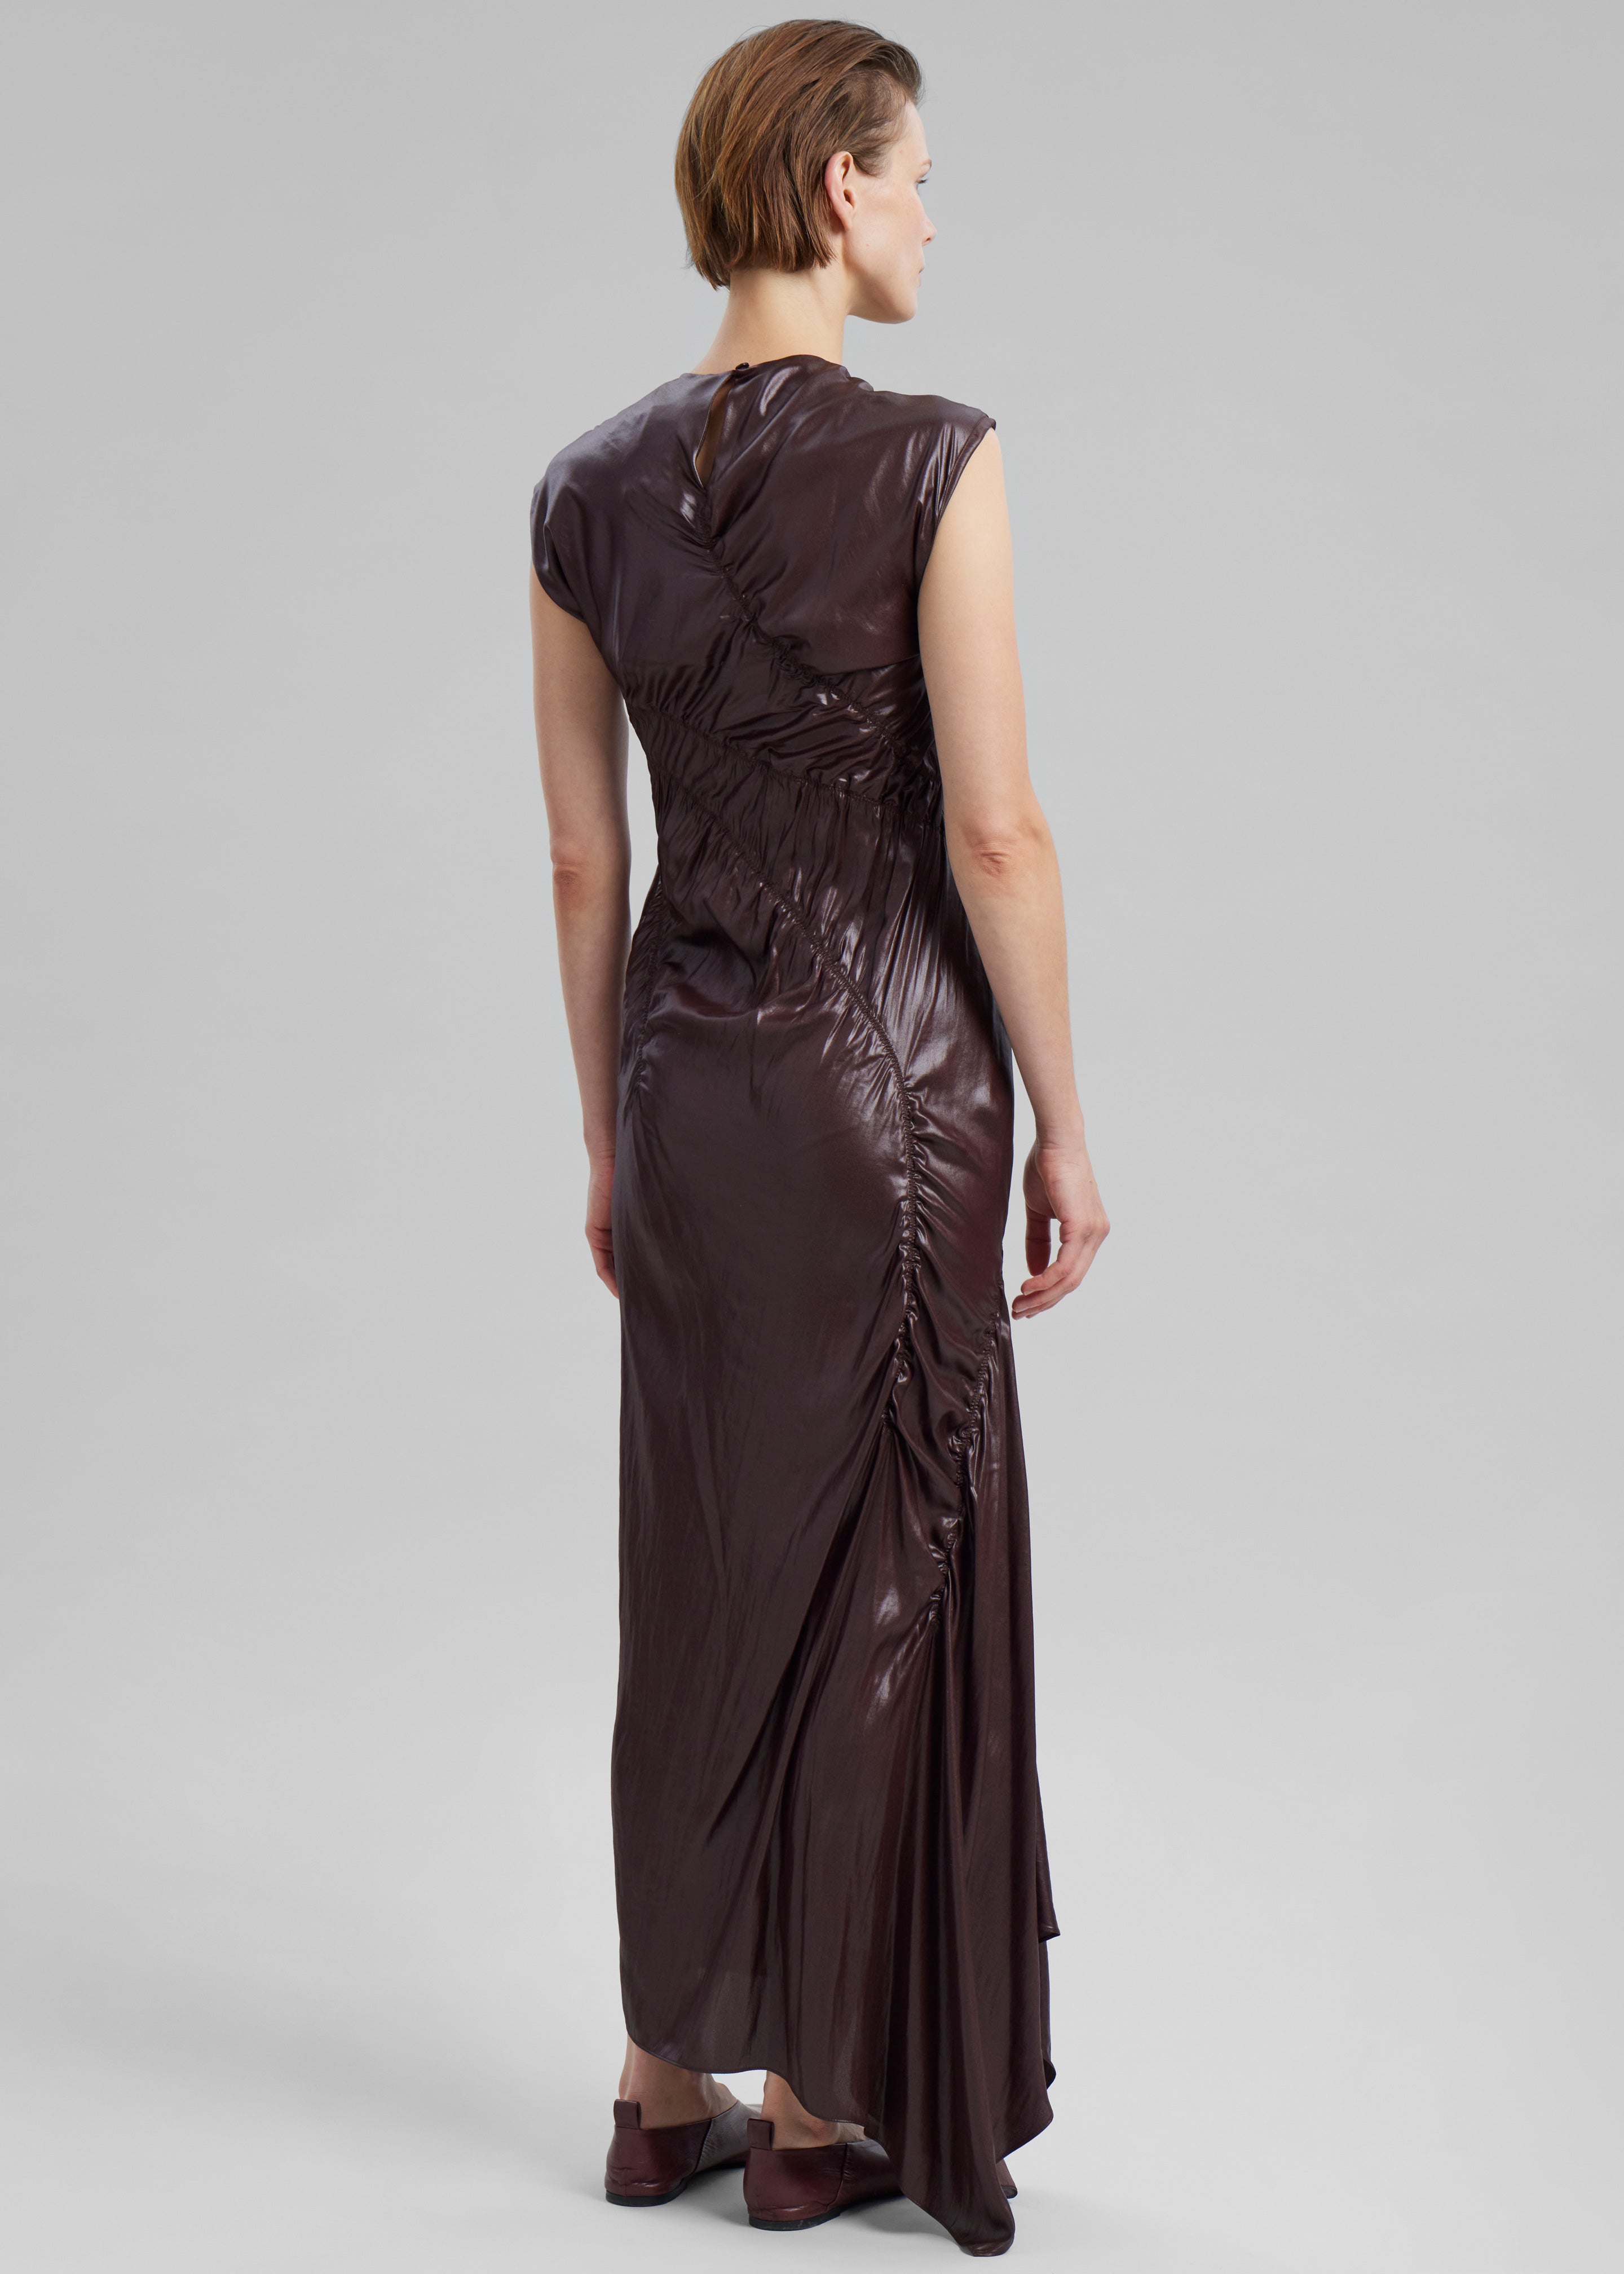 Sportmax Guelfo Dress - Dark Brown - 6